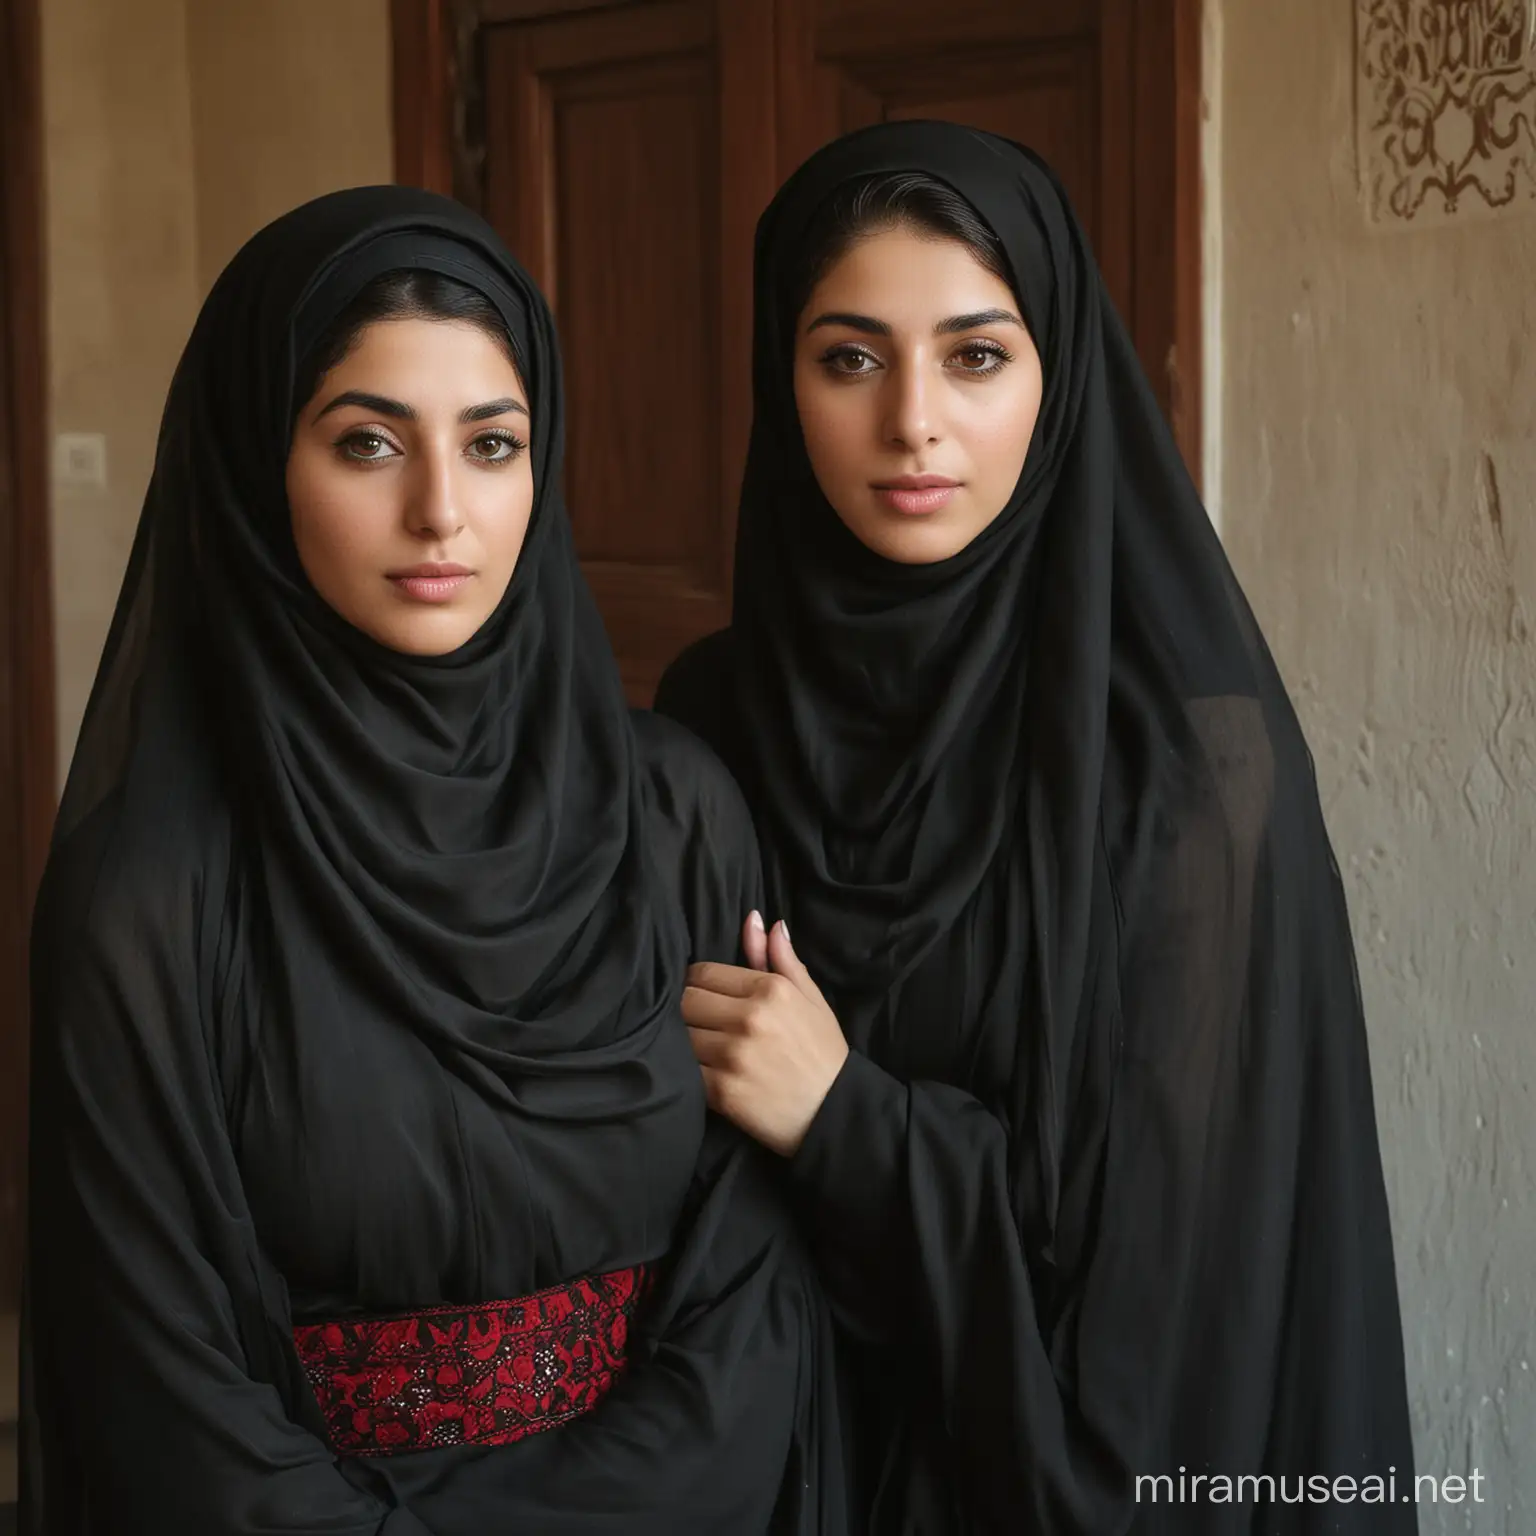 Iranian Beauties in Traditional Veils